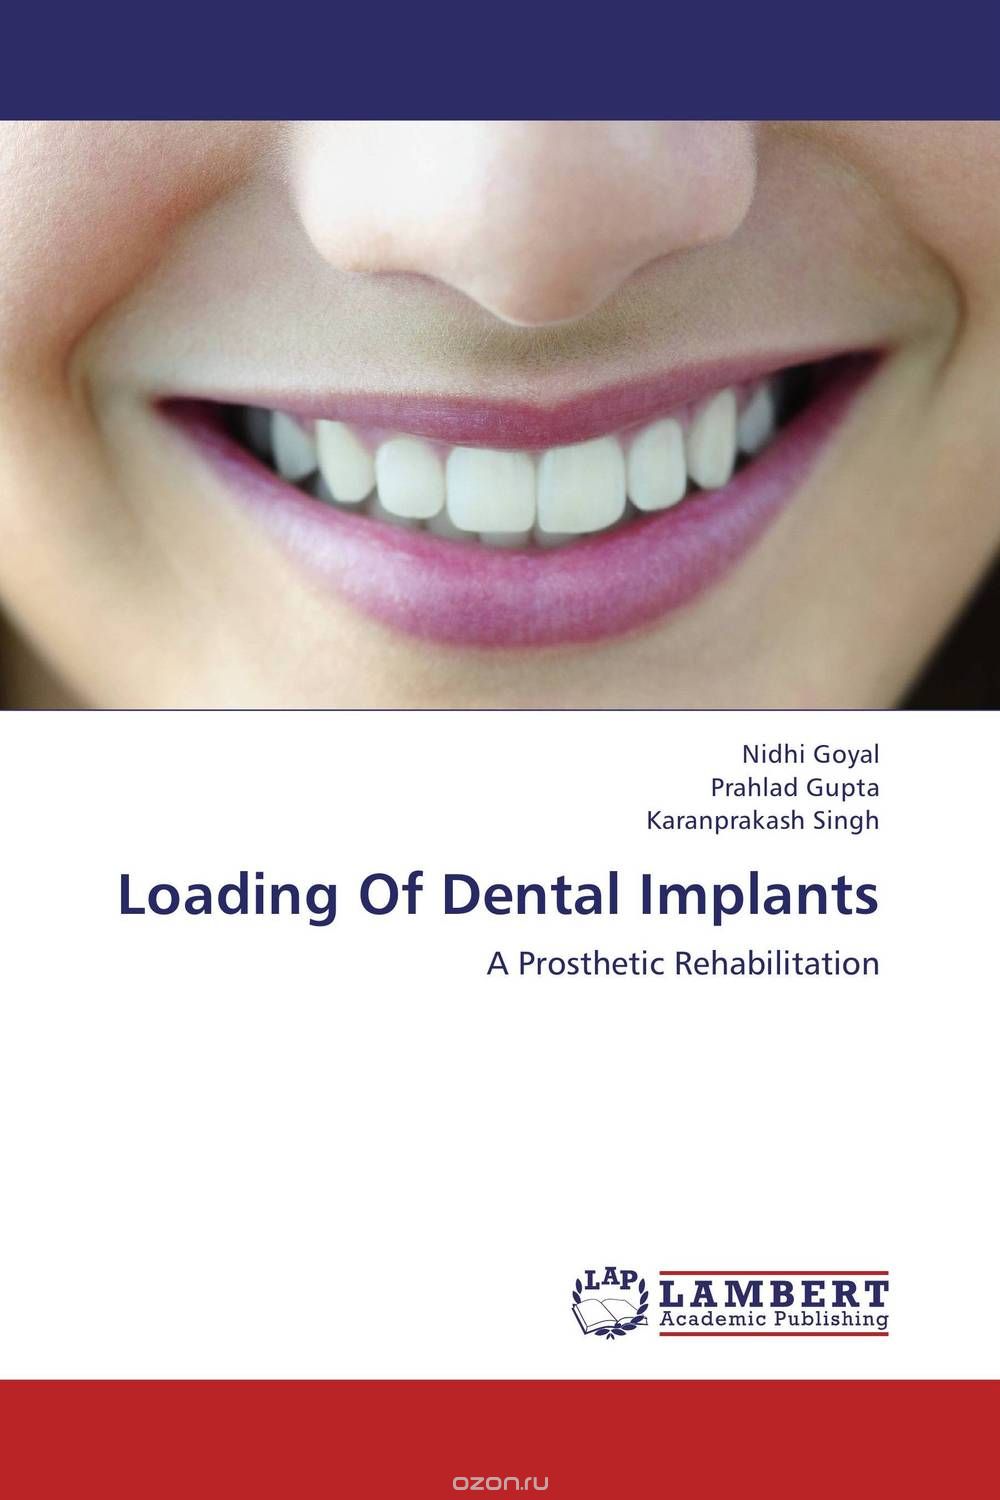 Loading Of Dental Implants